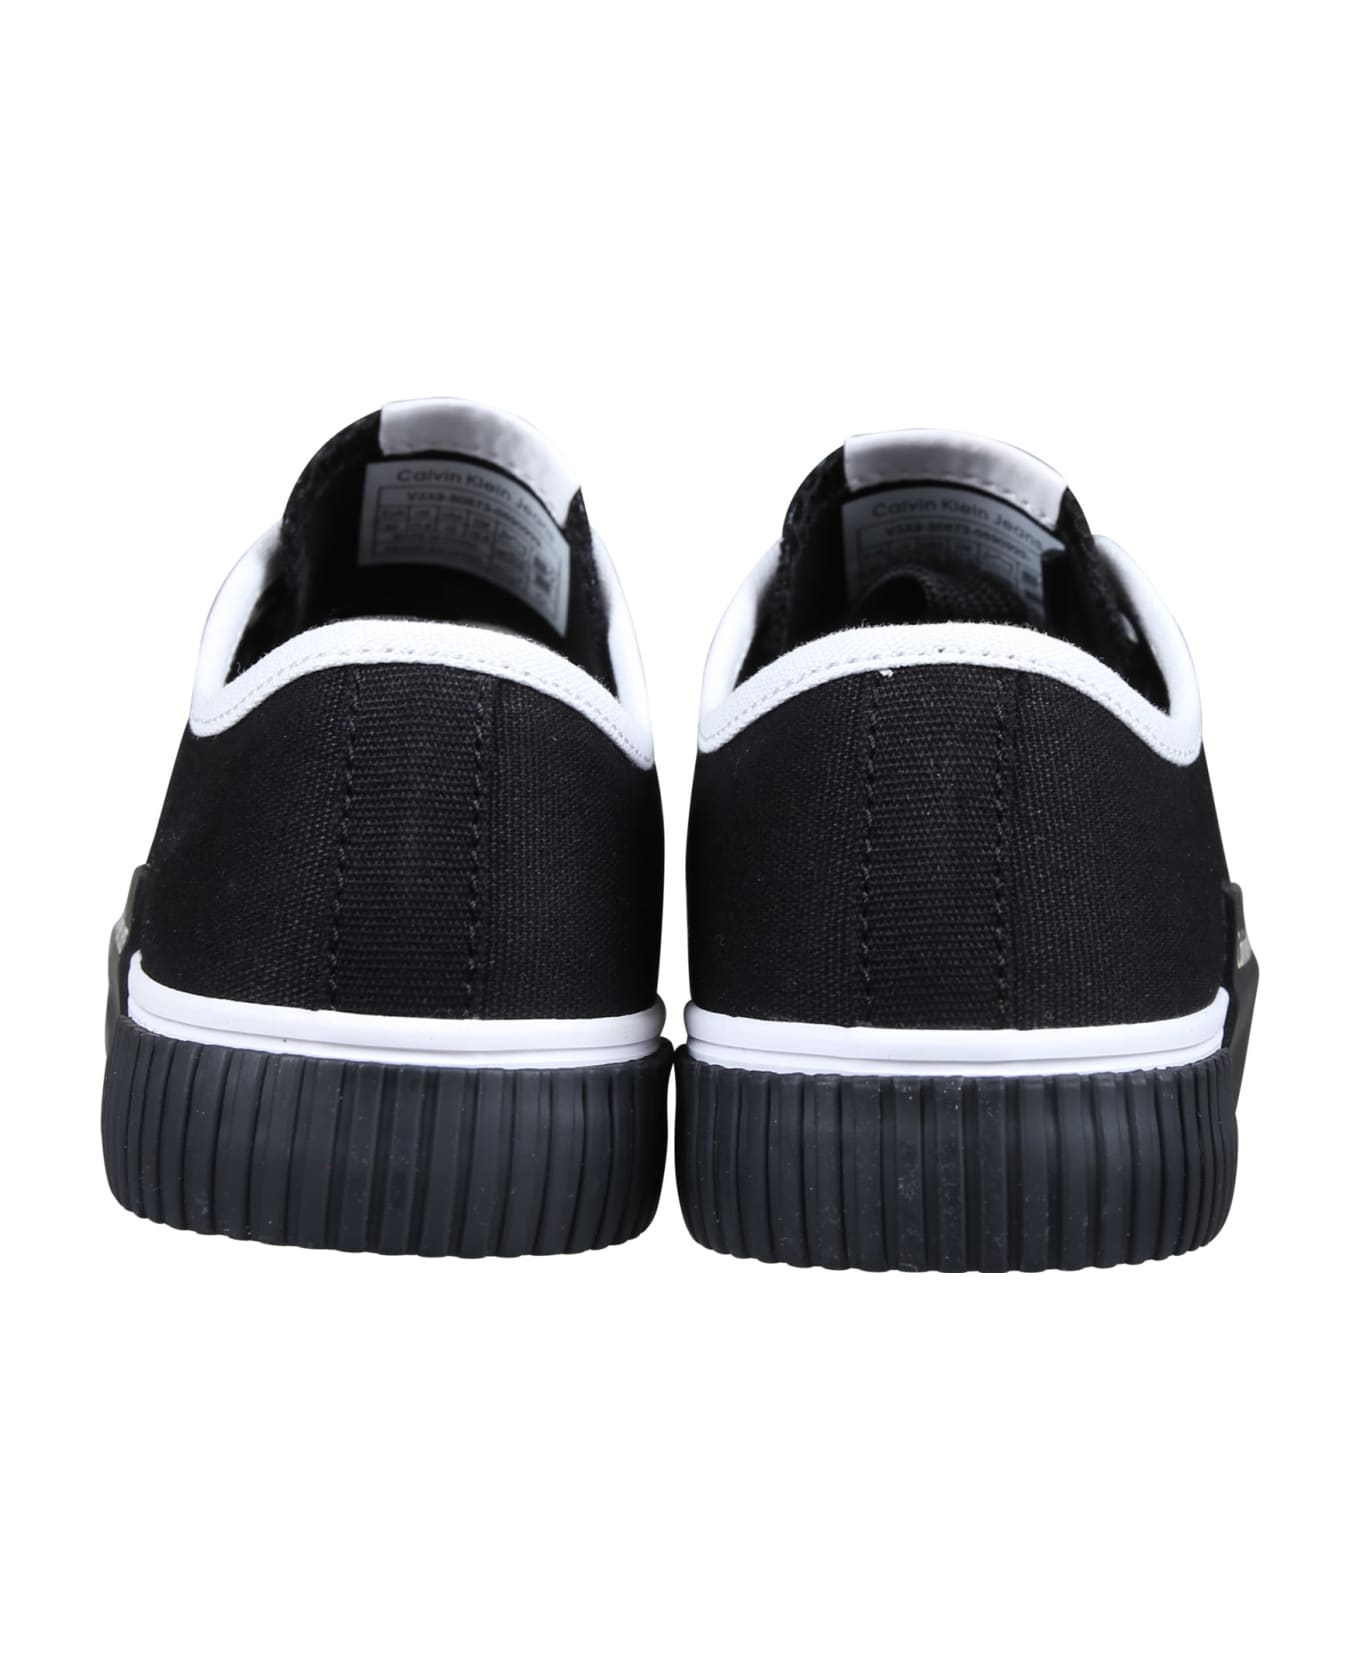 Calvin Klein Black Sneakers For Kids With Logo - Black